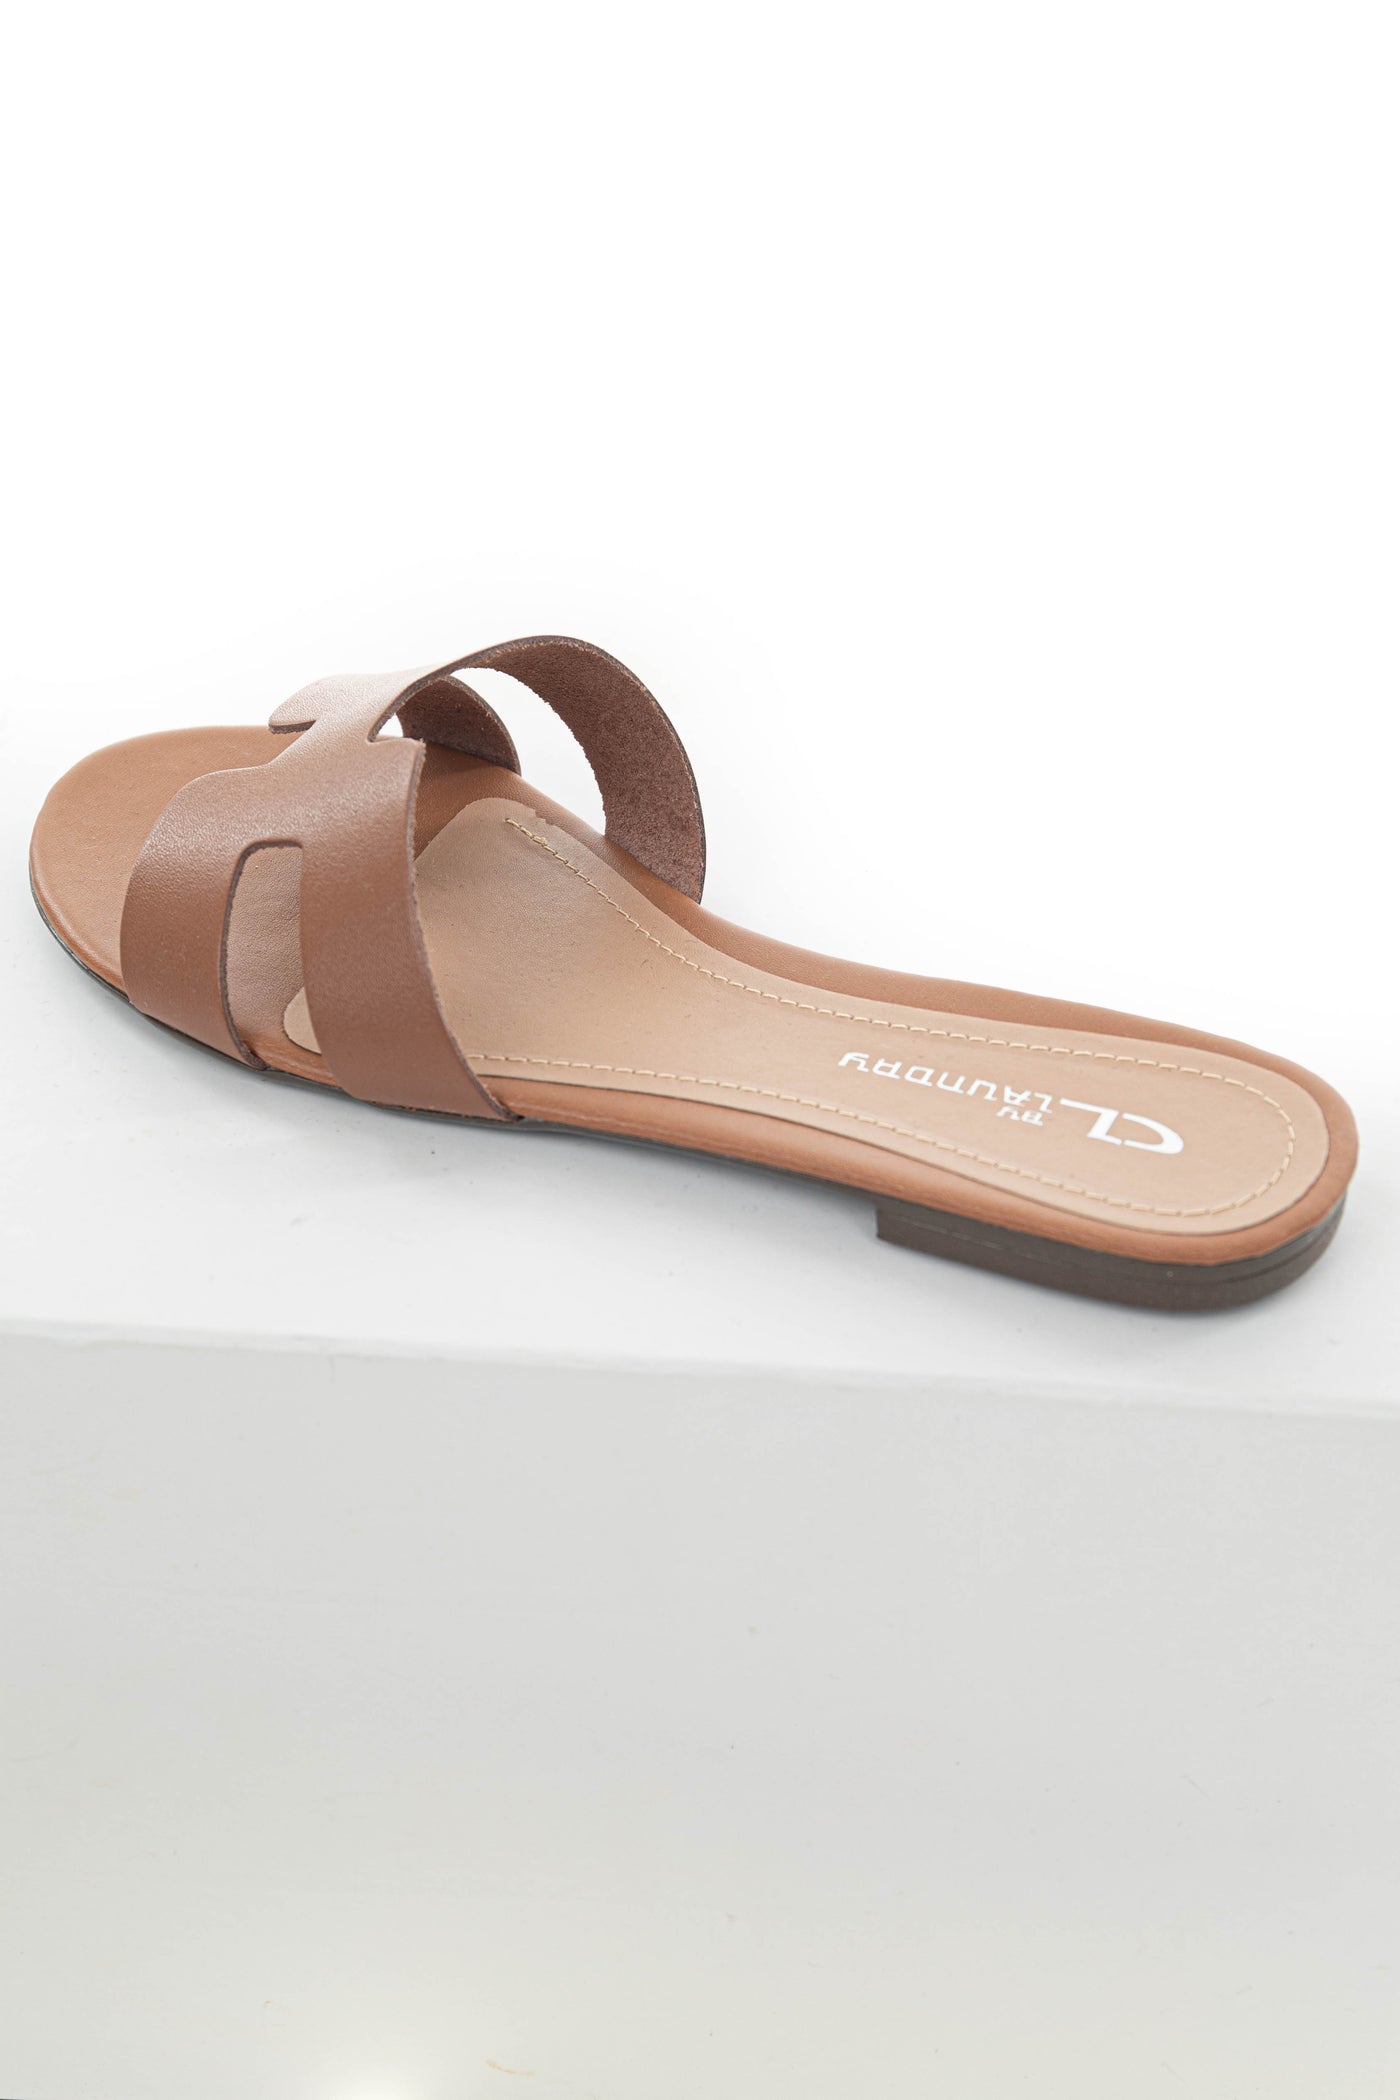 Cognac Leather Geometric Strap Flat Sandals